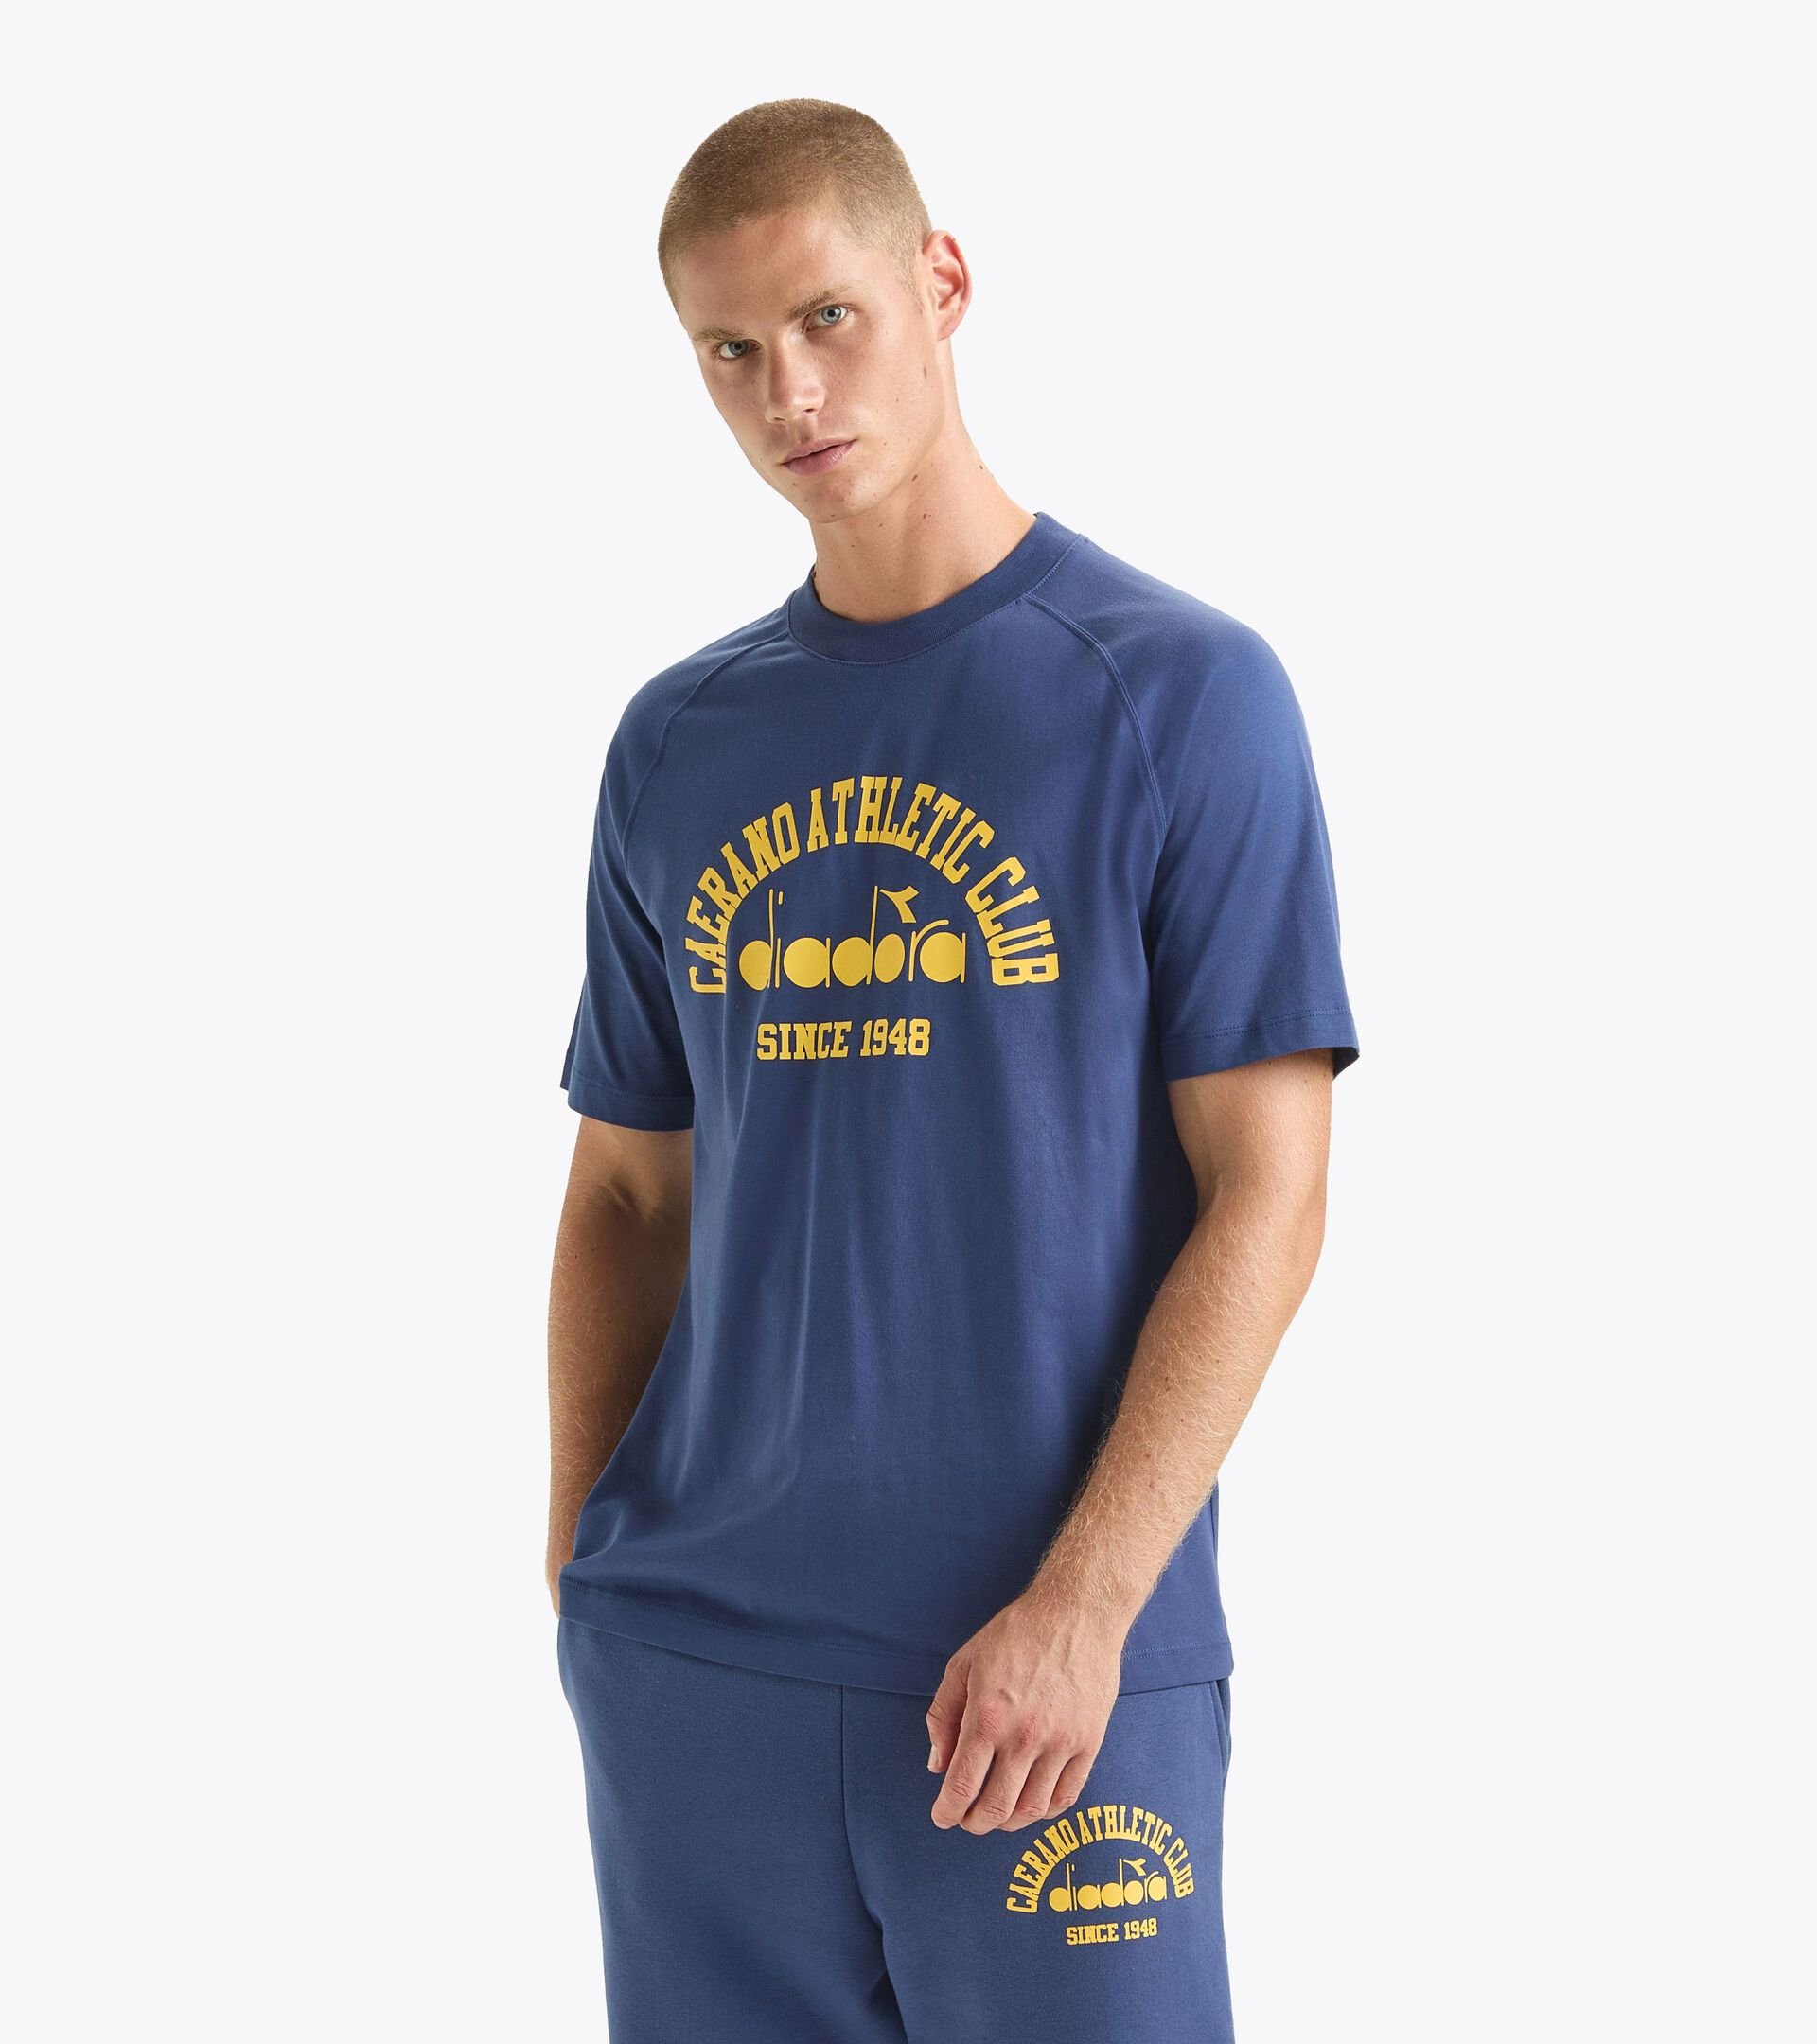 Camiseta deportiva - Gender neutral T-SHIRT SS 1948 ATHL. CLUB OCEANA - Diadora